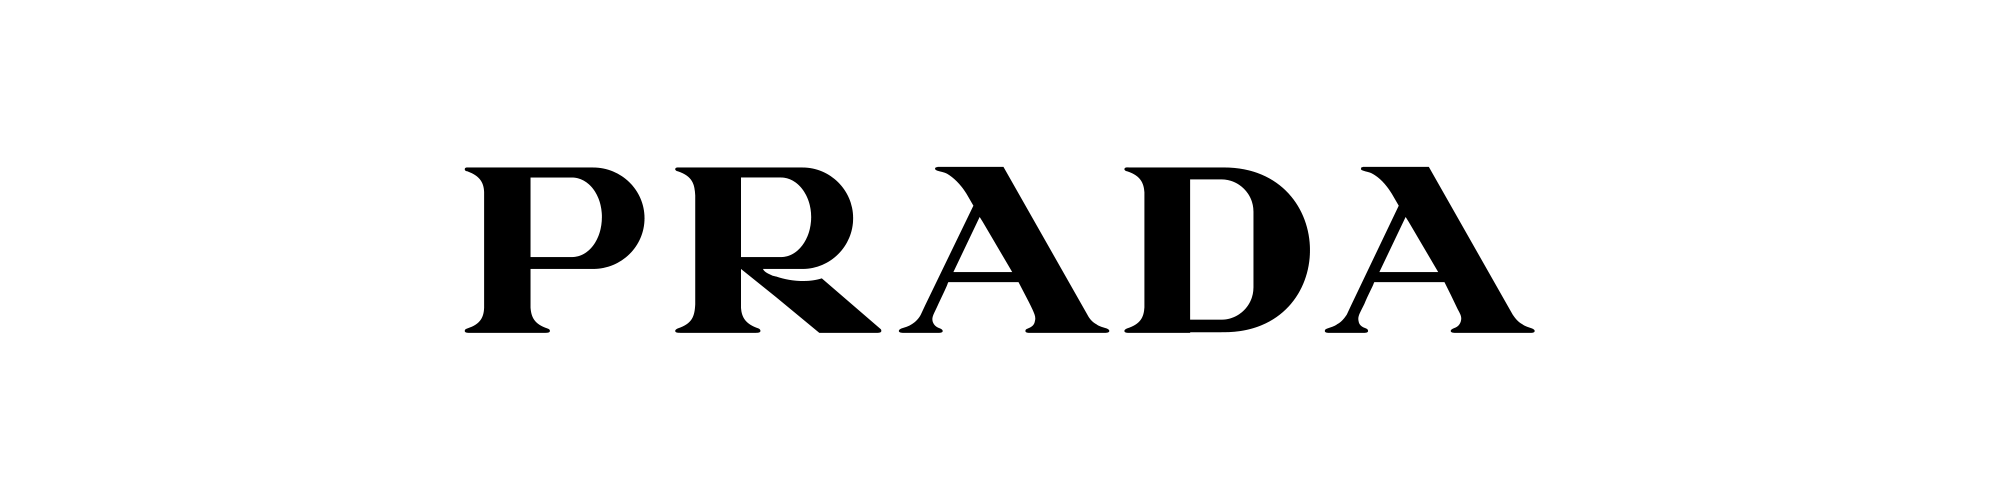 Prada's logo uses neutrals color psychology